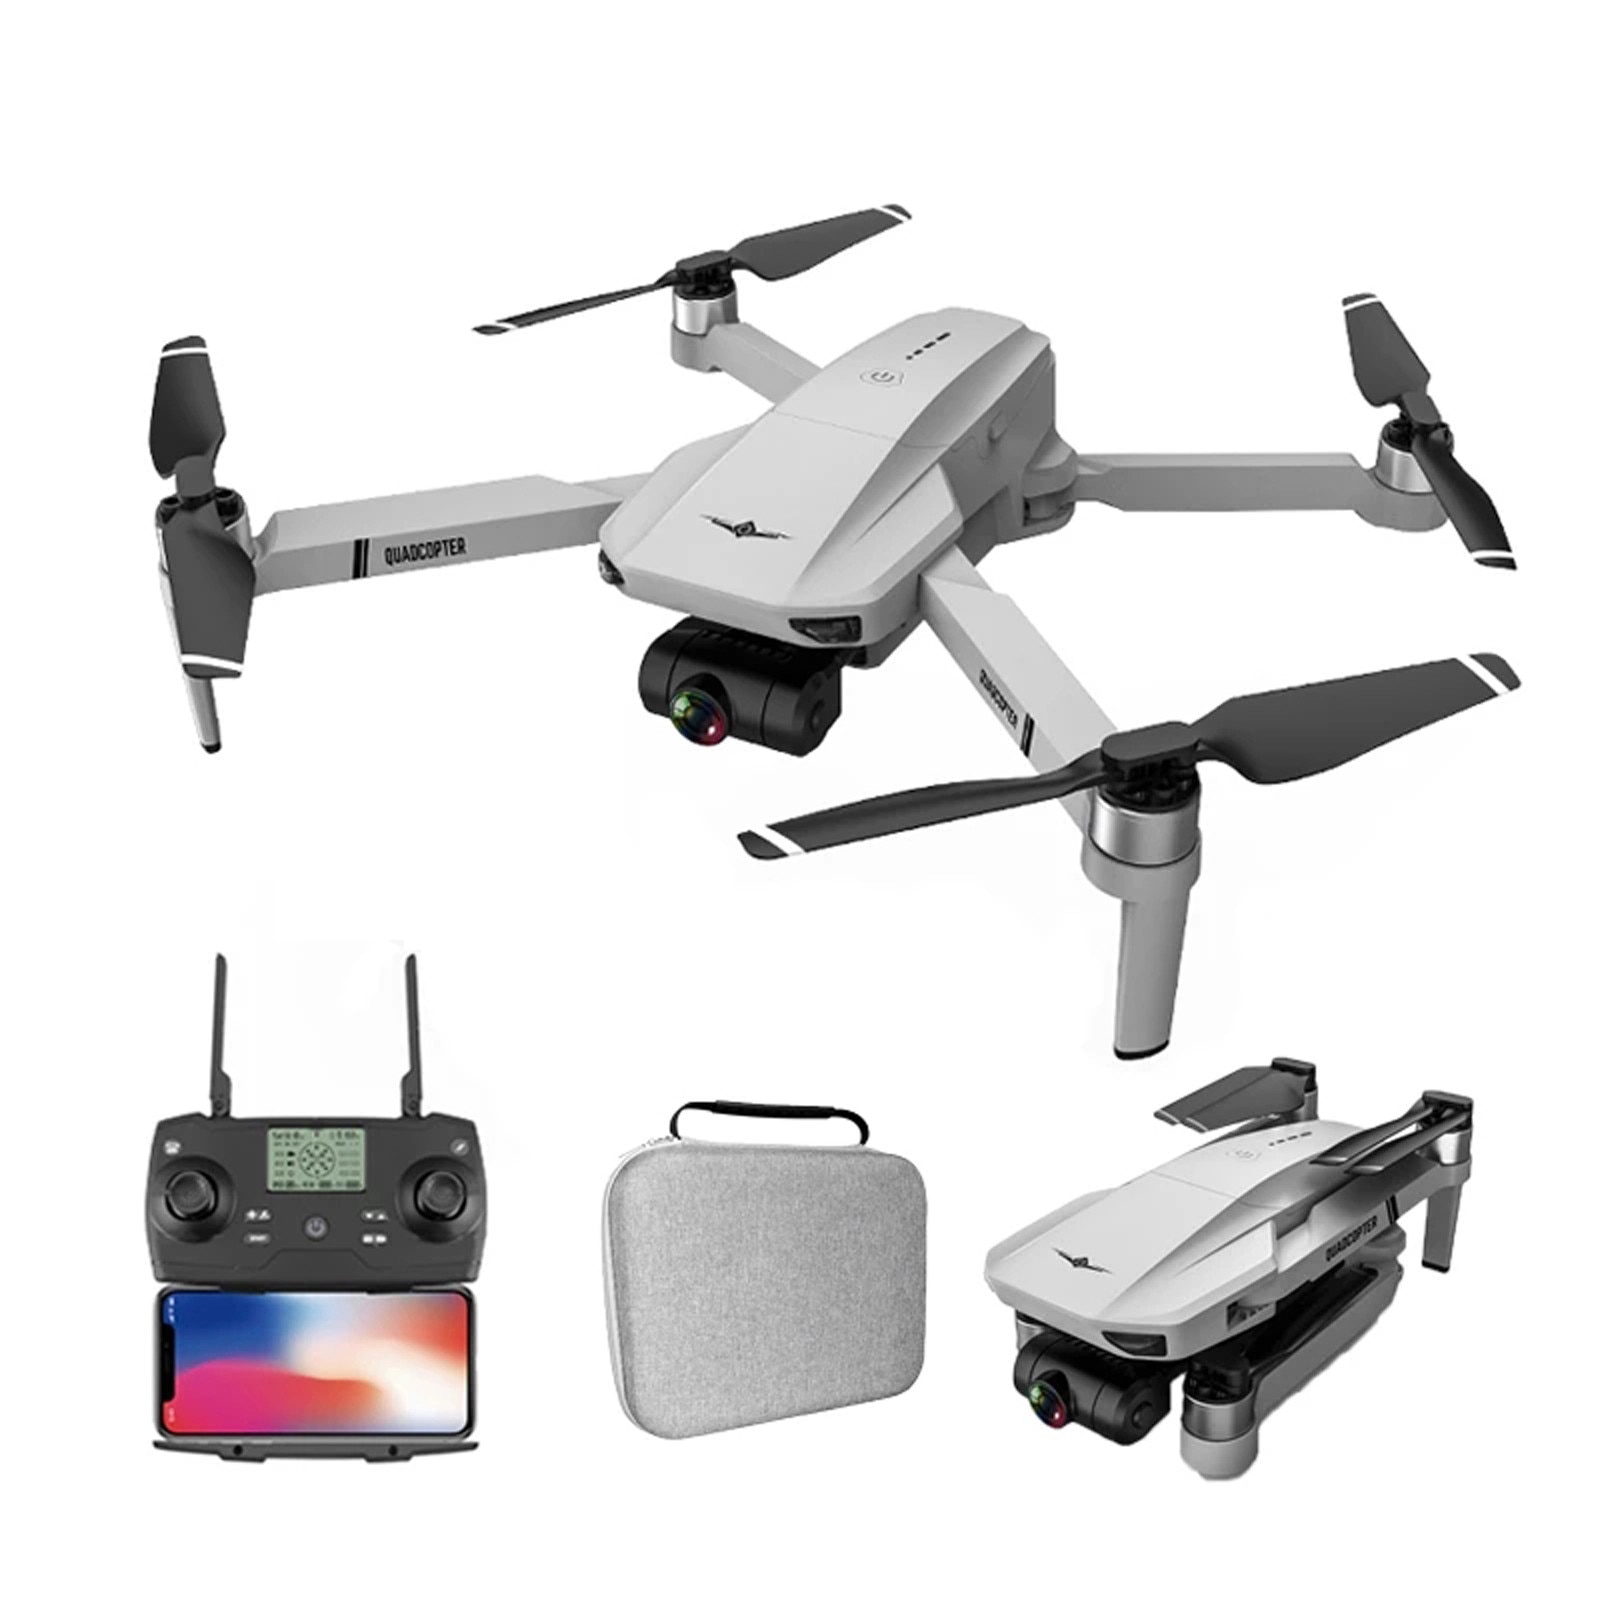 Kf102-Drone-Gps-4k-Gimbal-Hd-Camera-Wifi-Fpv-Professional-Brushless-Foldable-Rc-Quadcopter-Anti-shak-1005002561555938